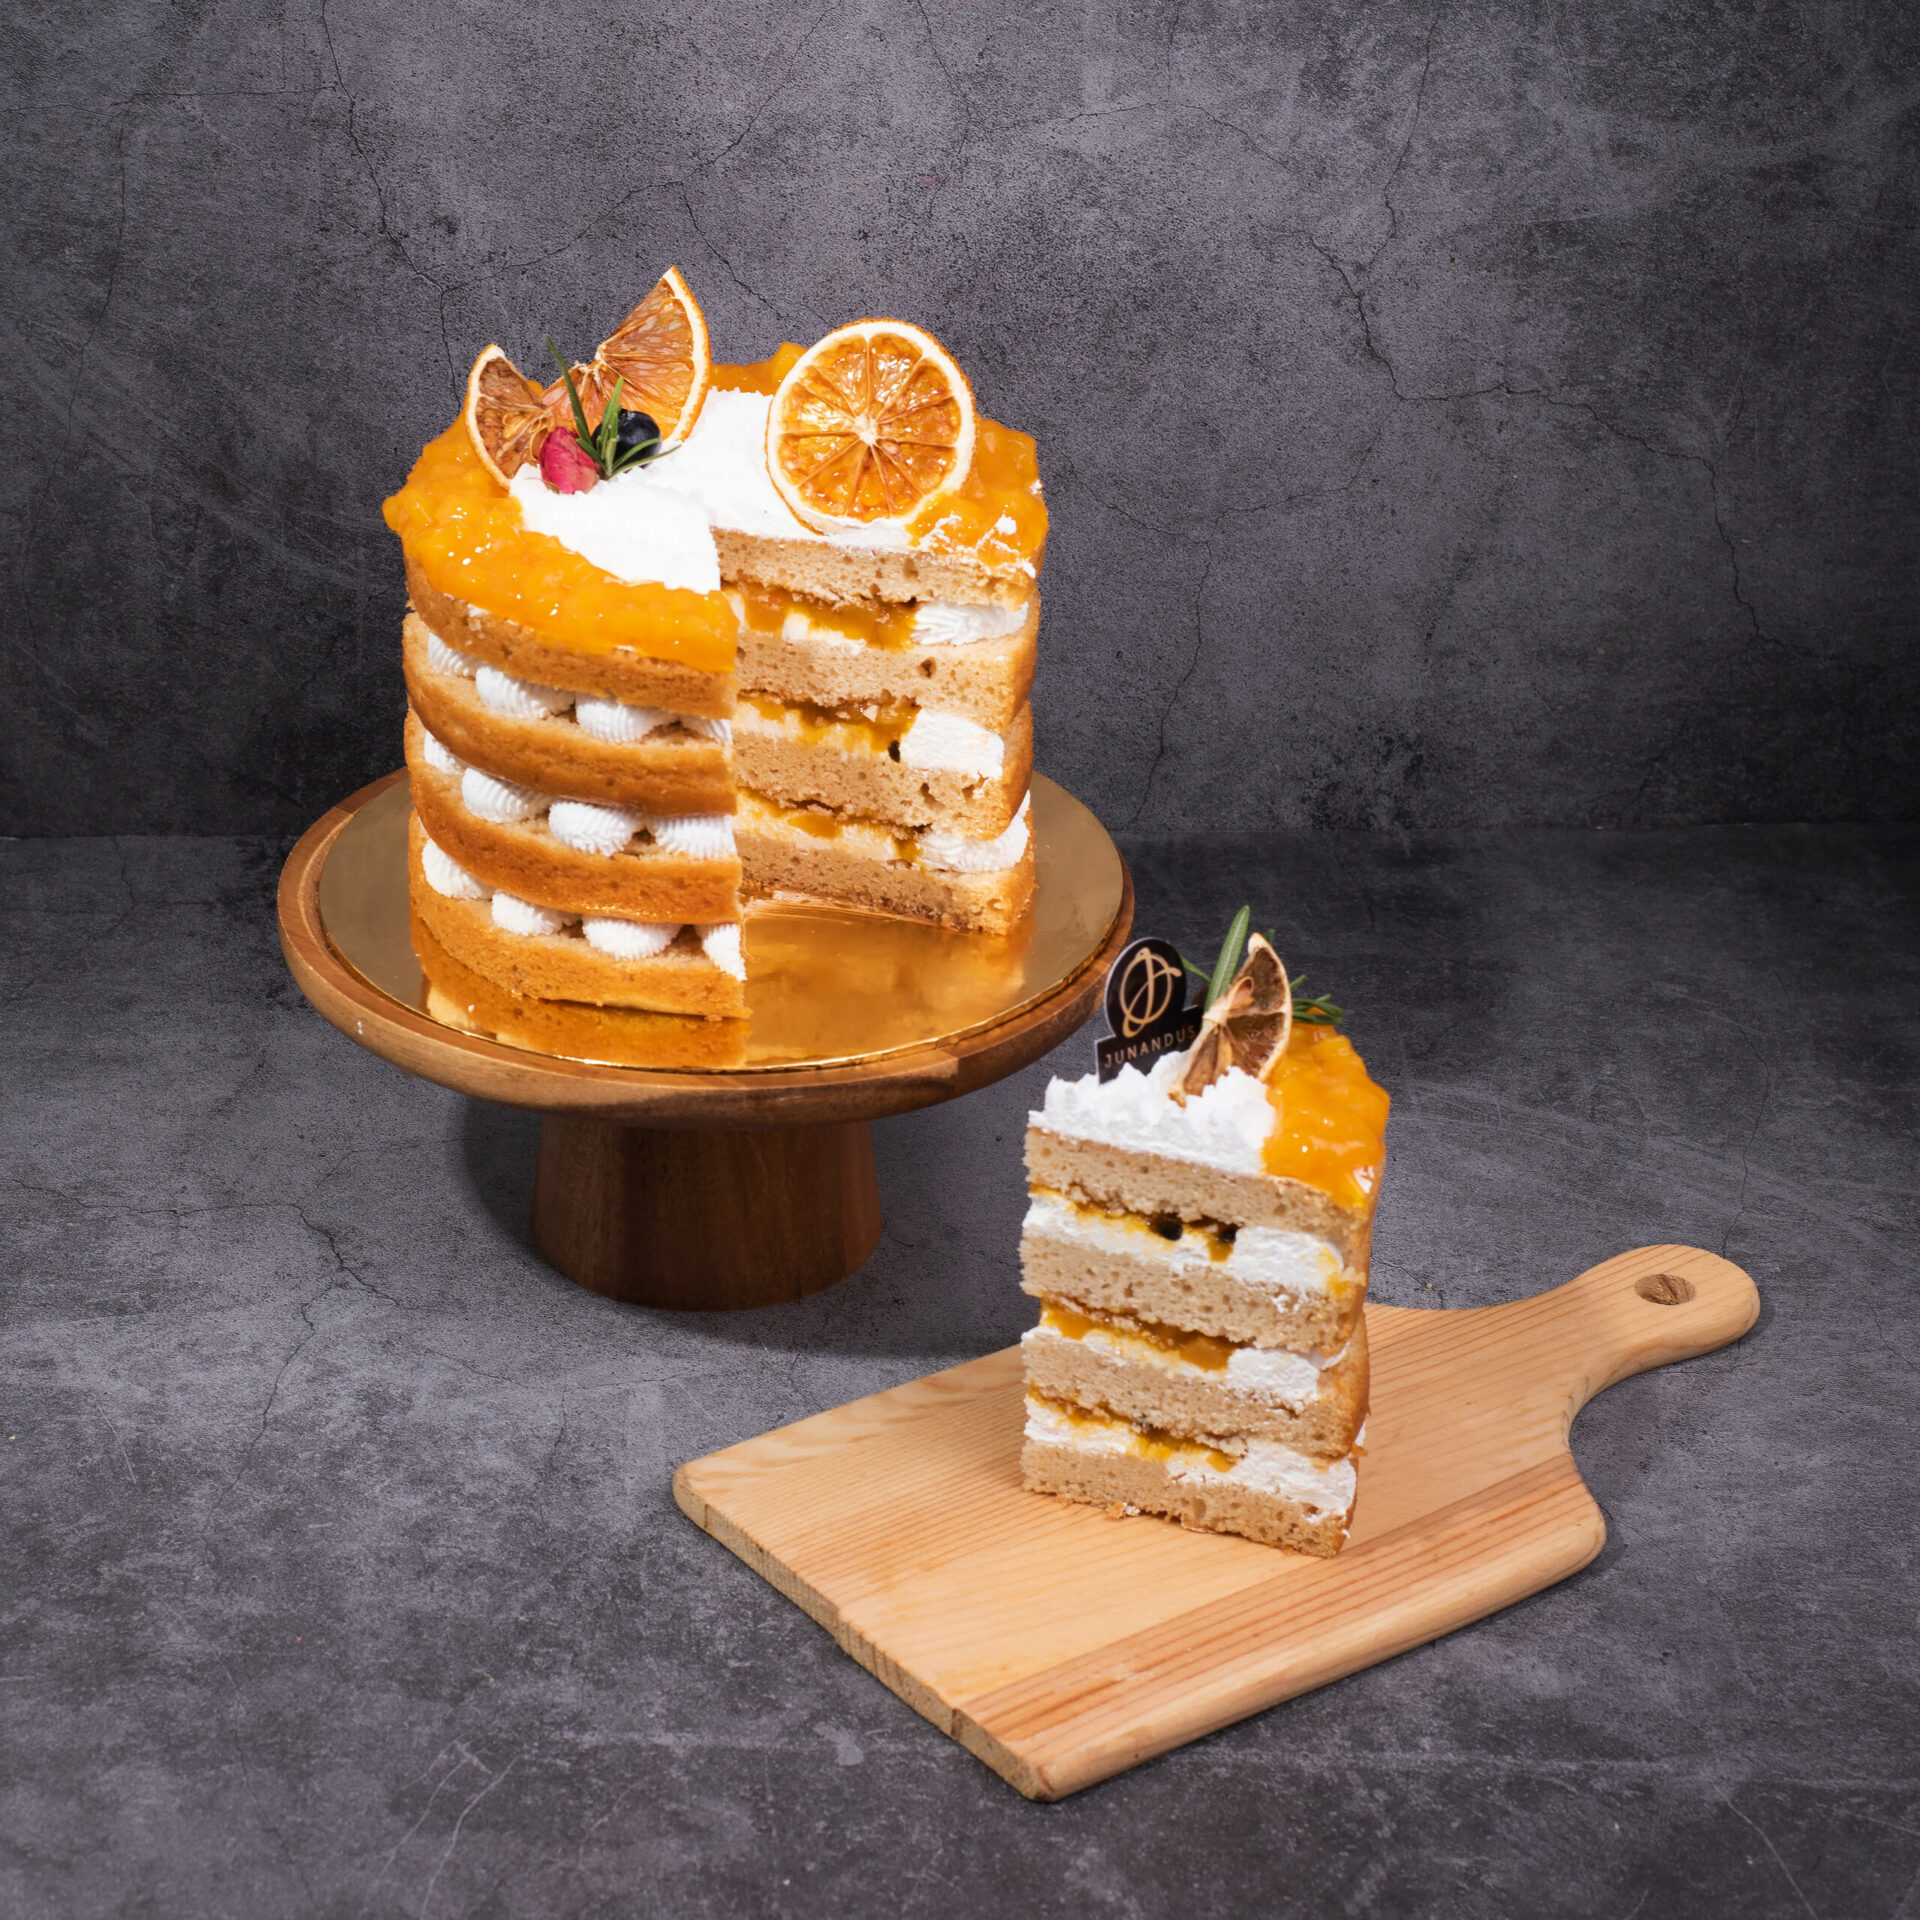 Mango Passion Vegan Naked Cake | Cake Free Delivery KL & PJ